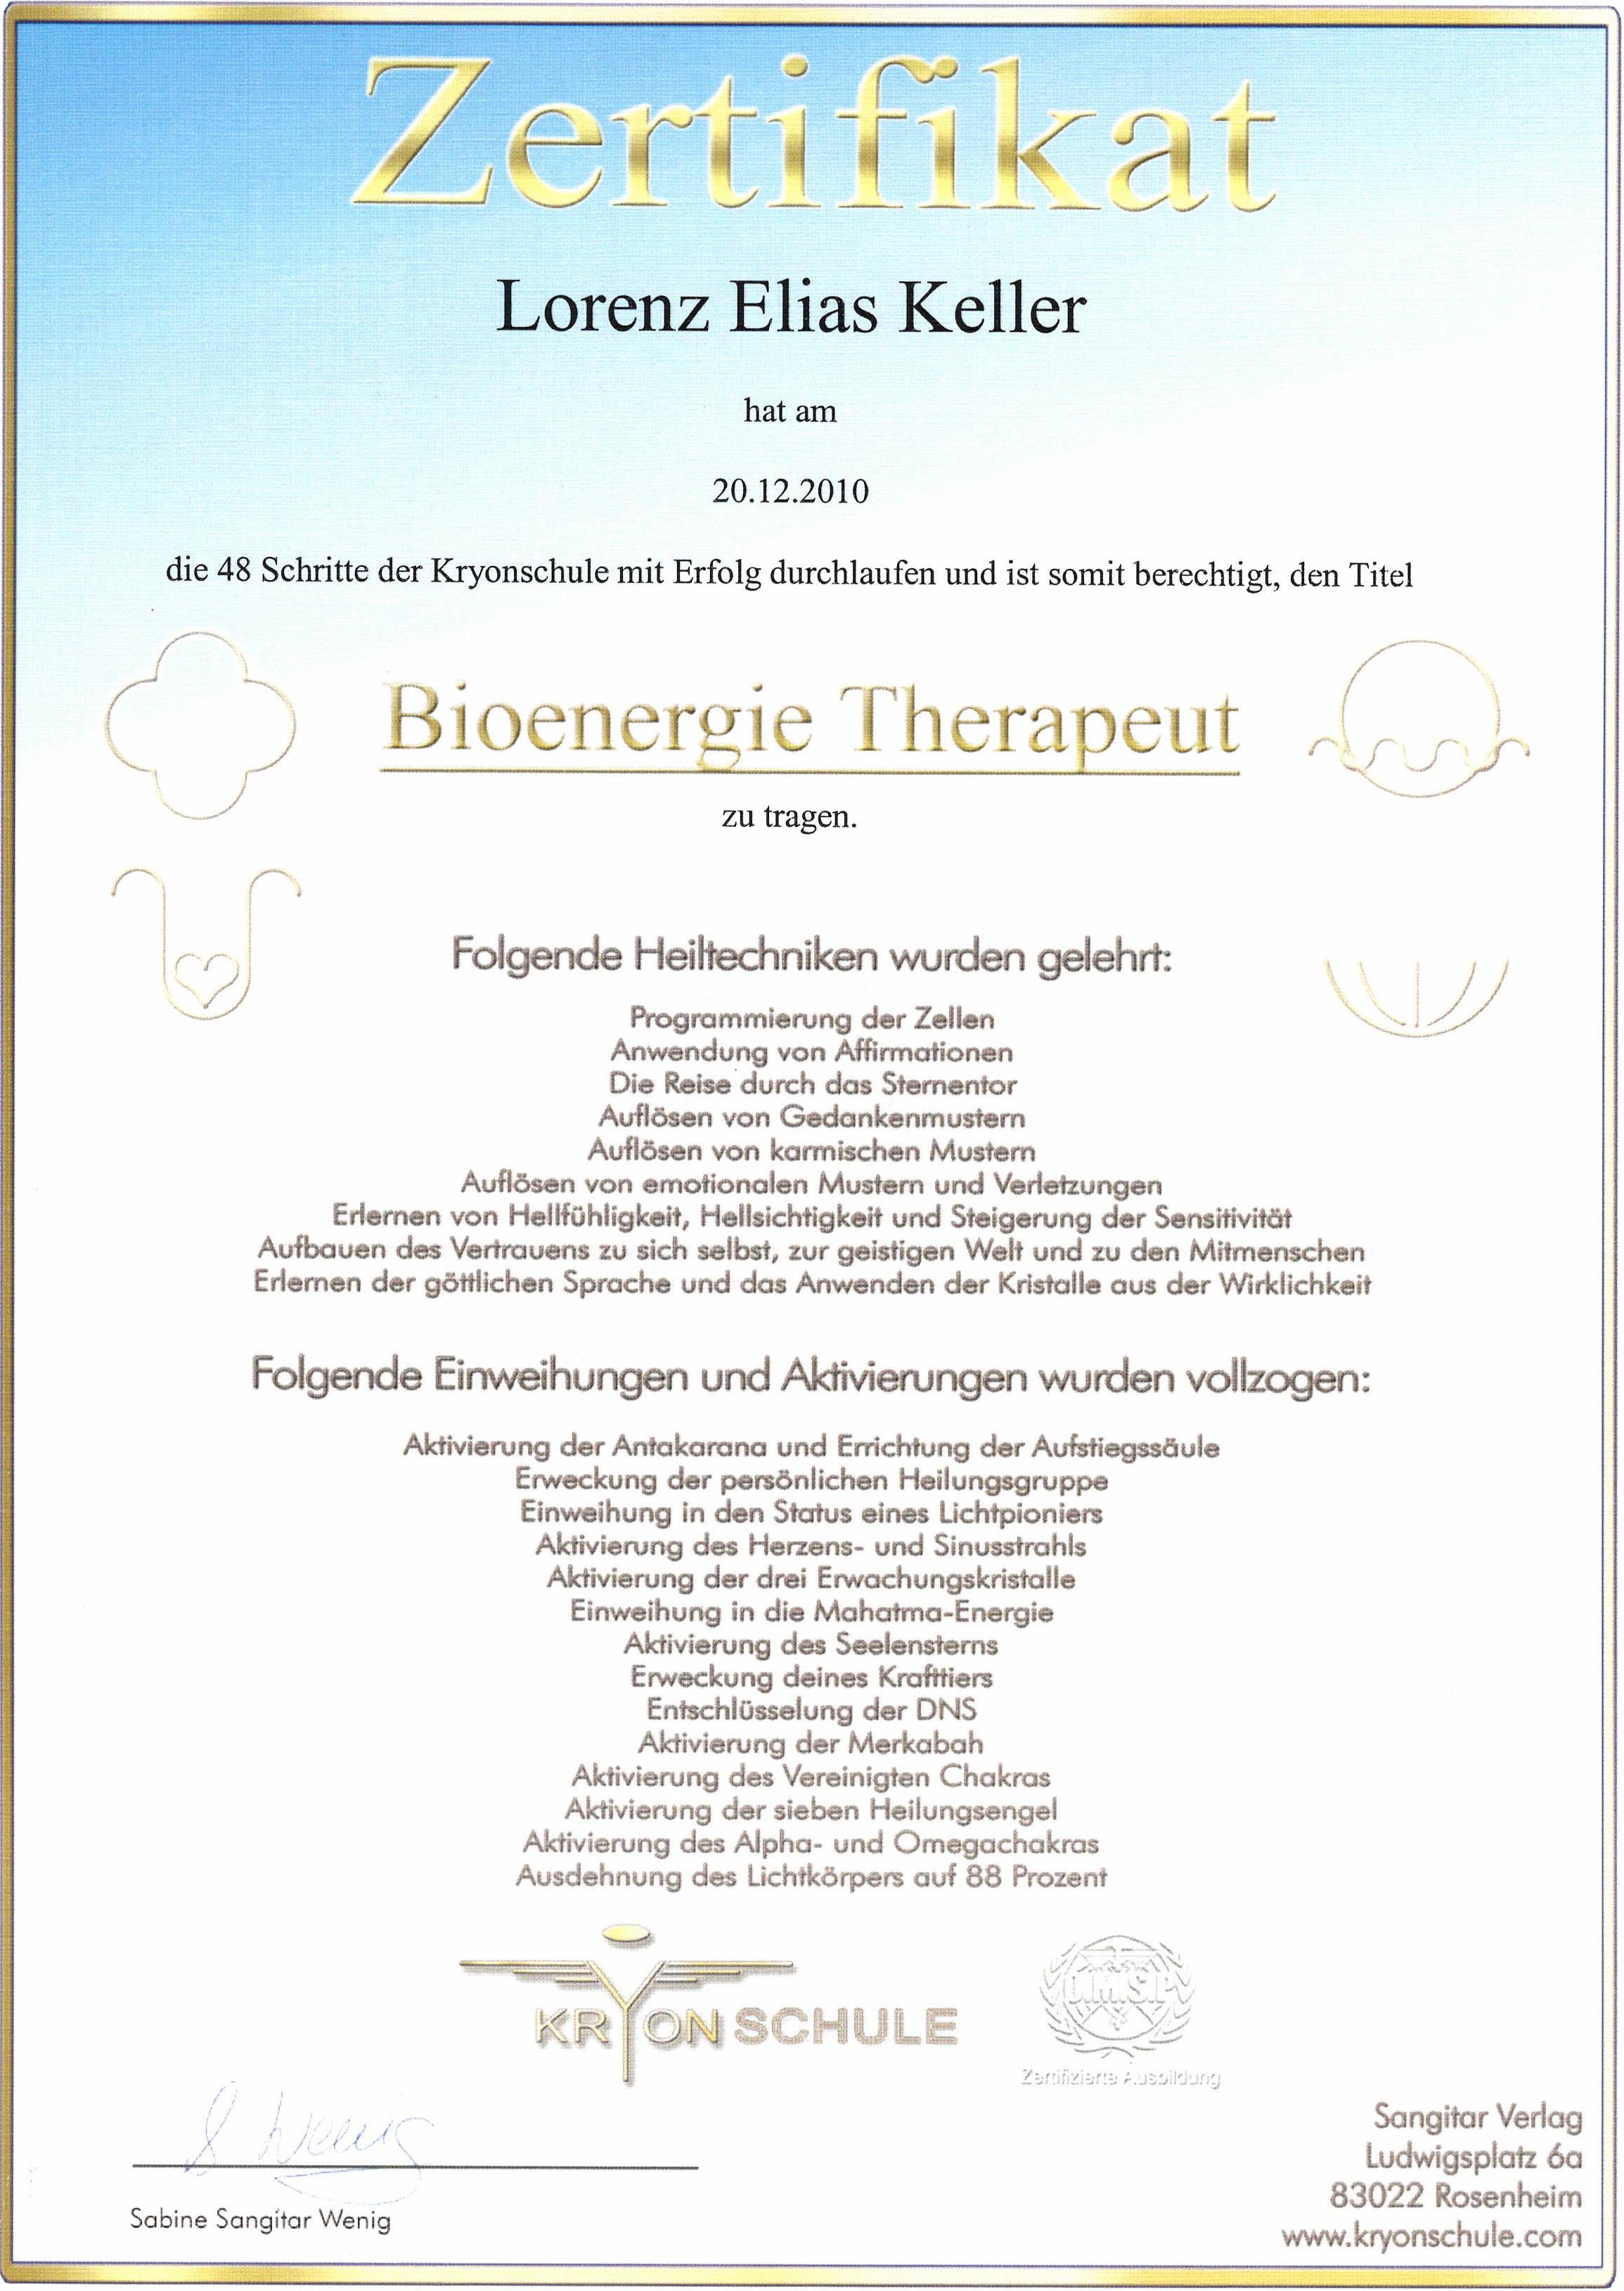 Bioenergie Therapeut